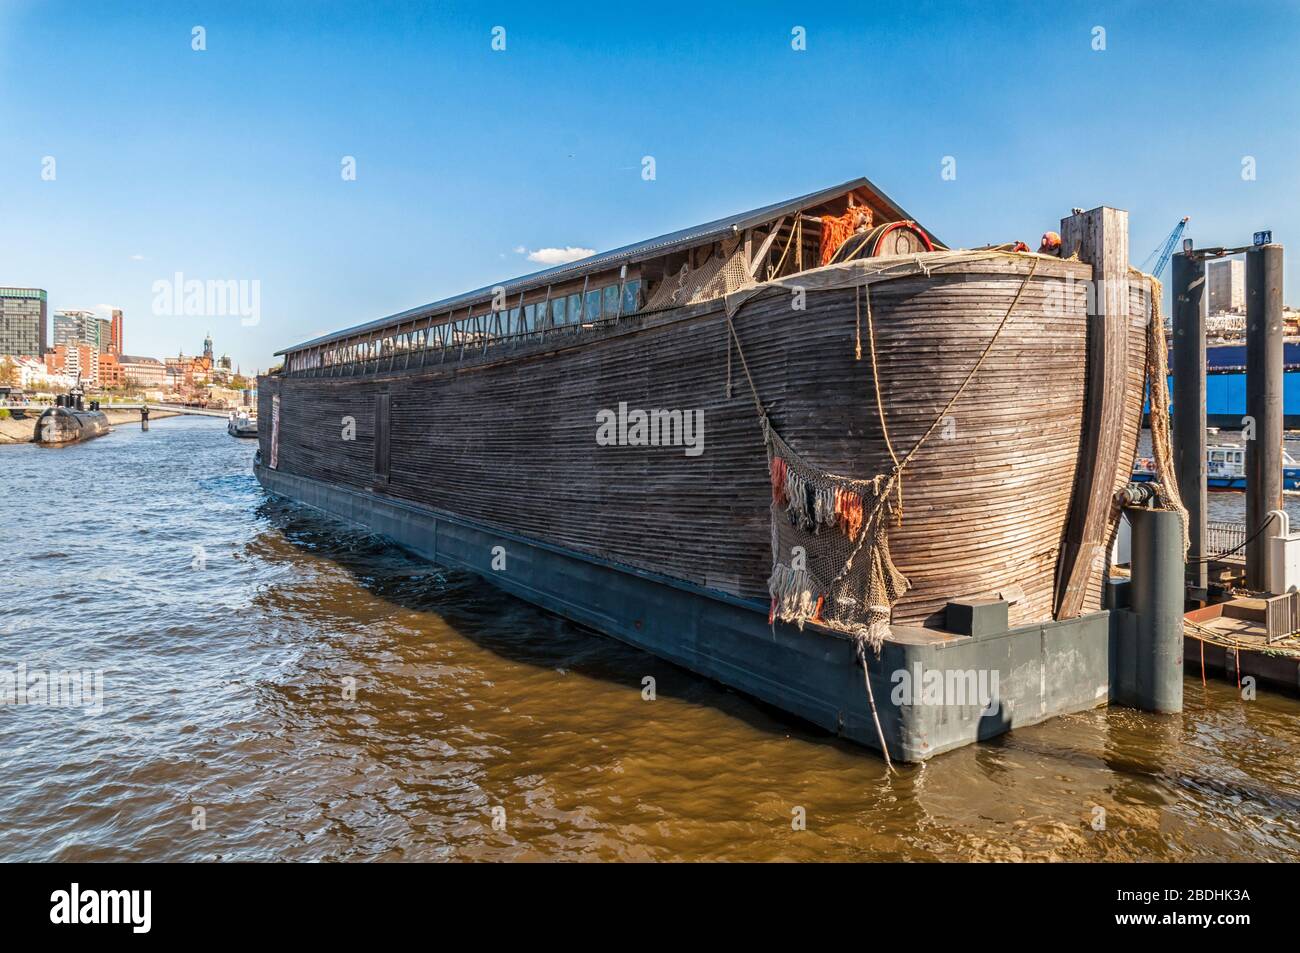 Wooden ship Noah's ark in the port of Hamburg Stock Photo